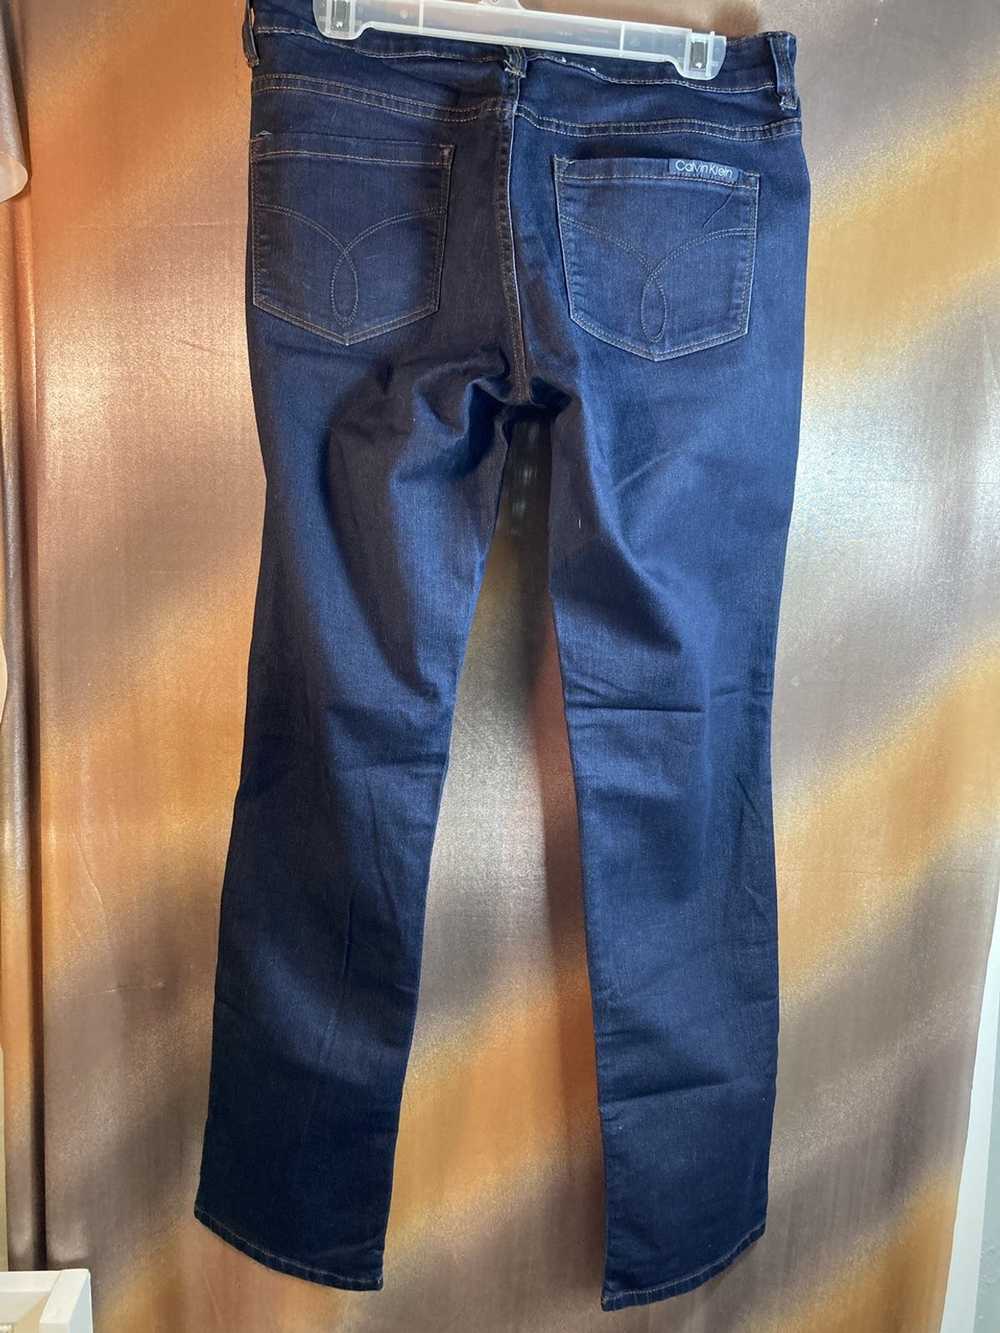 Calvin Klein Calvin Klein stretchy jeans size 8 3… - image 3